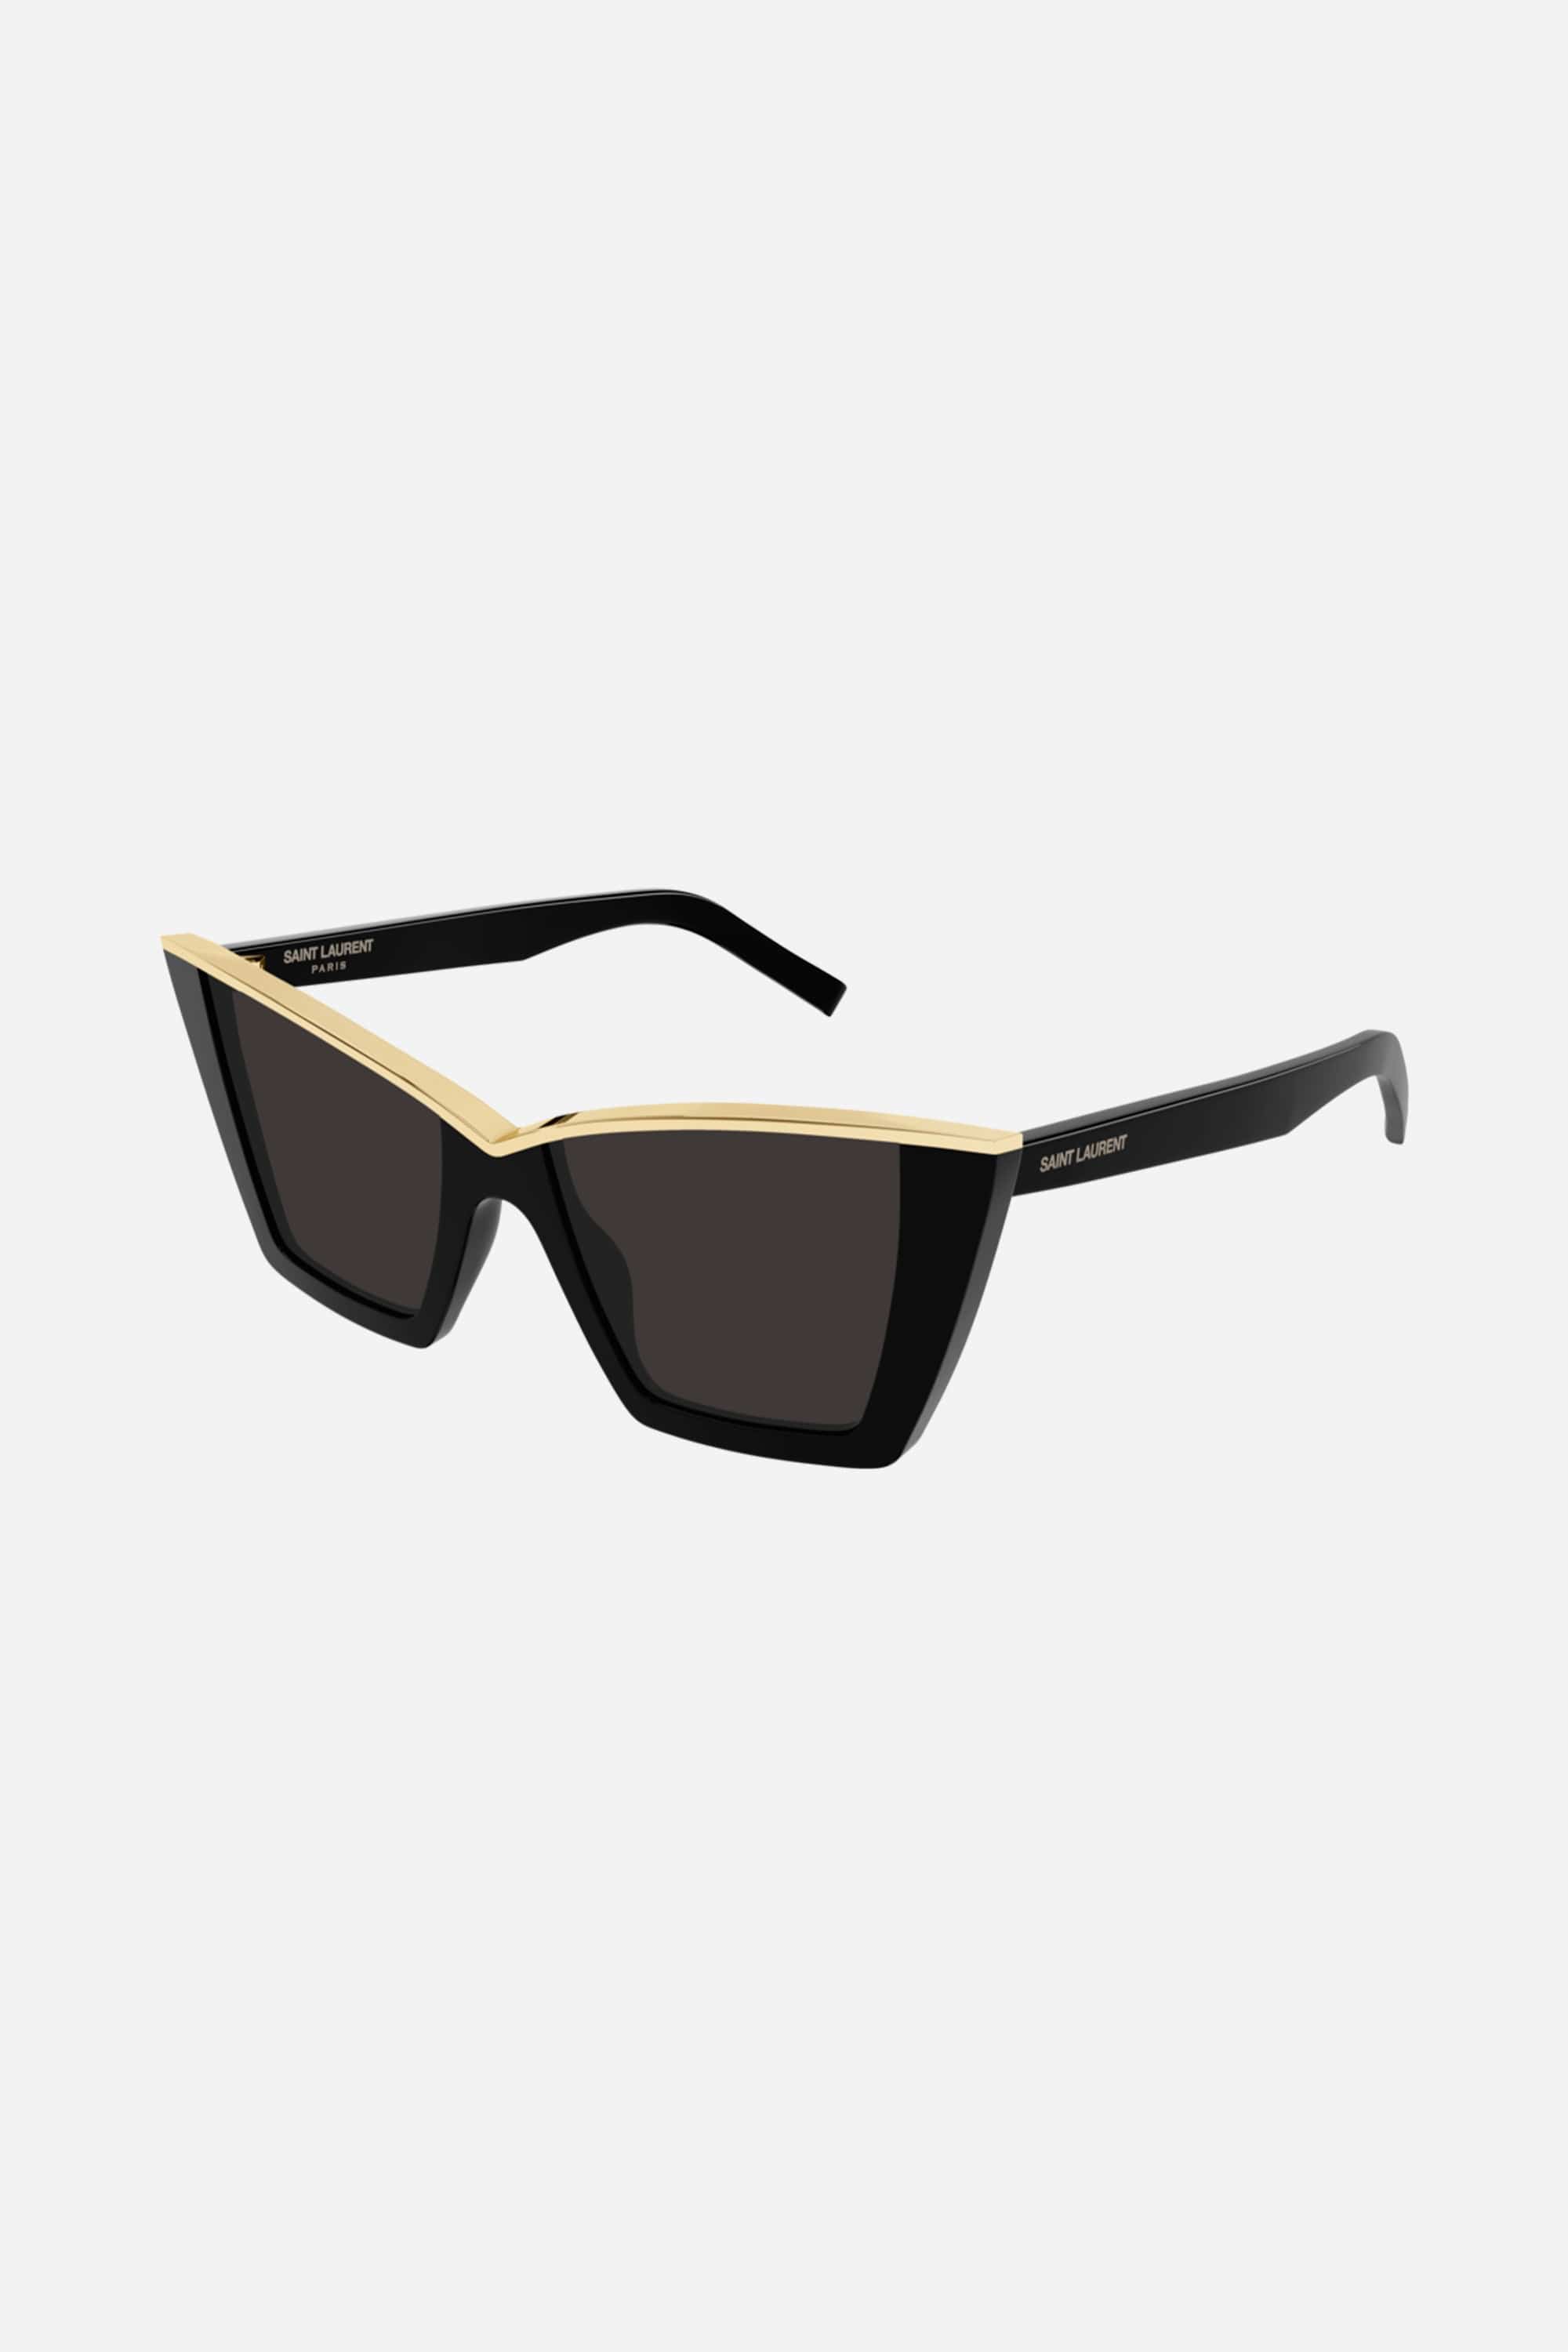 Saint Laurent cat eye black and gold sunglasses - Eyewear Club